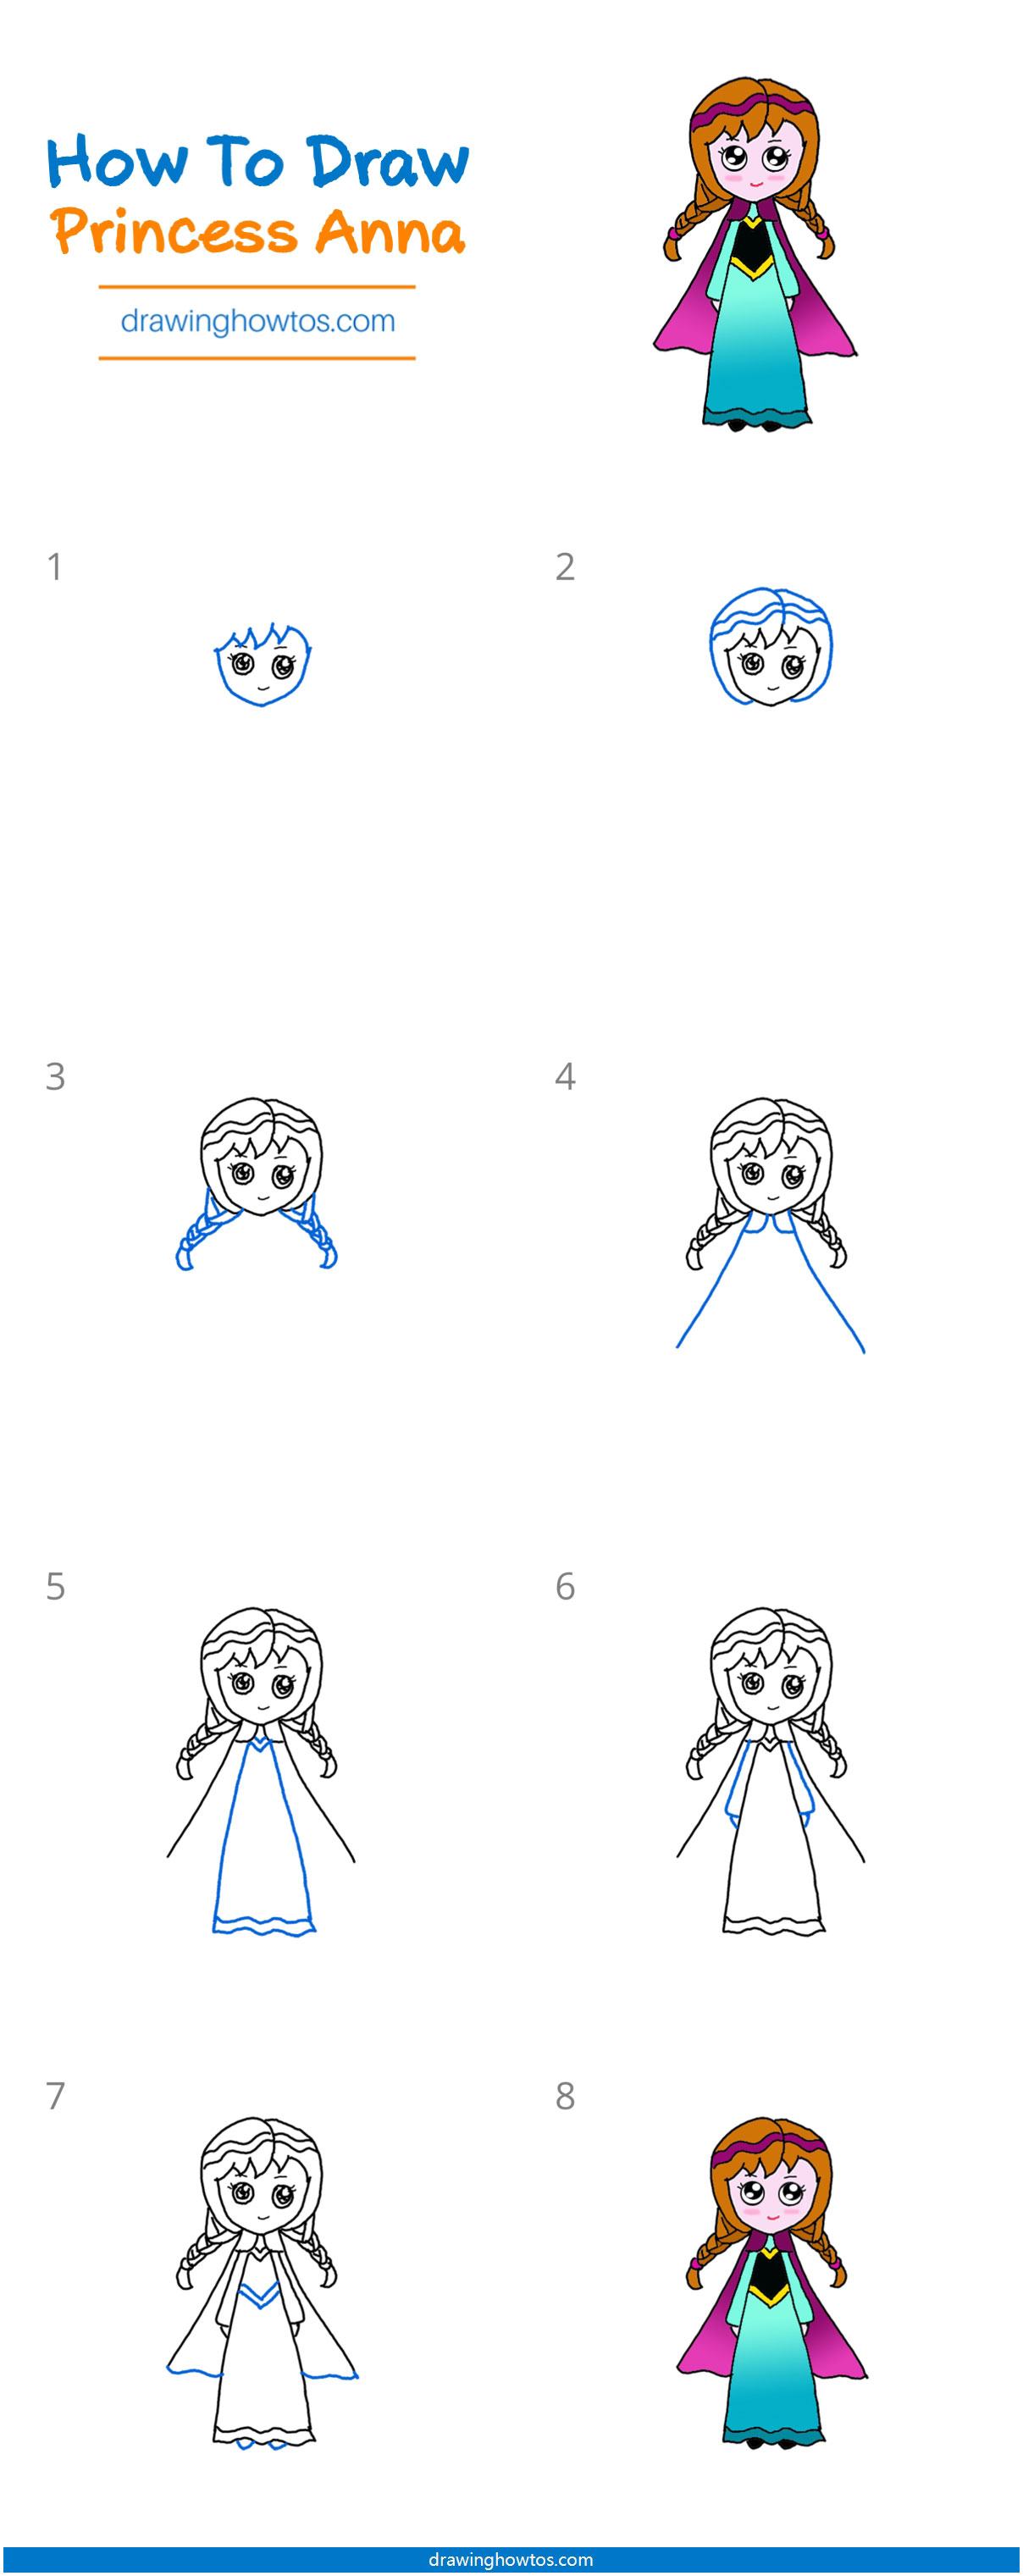 How to Draw Princess Anna Step by Step